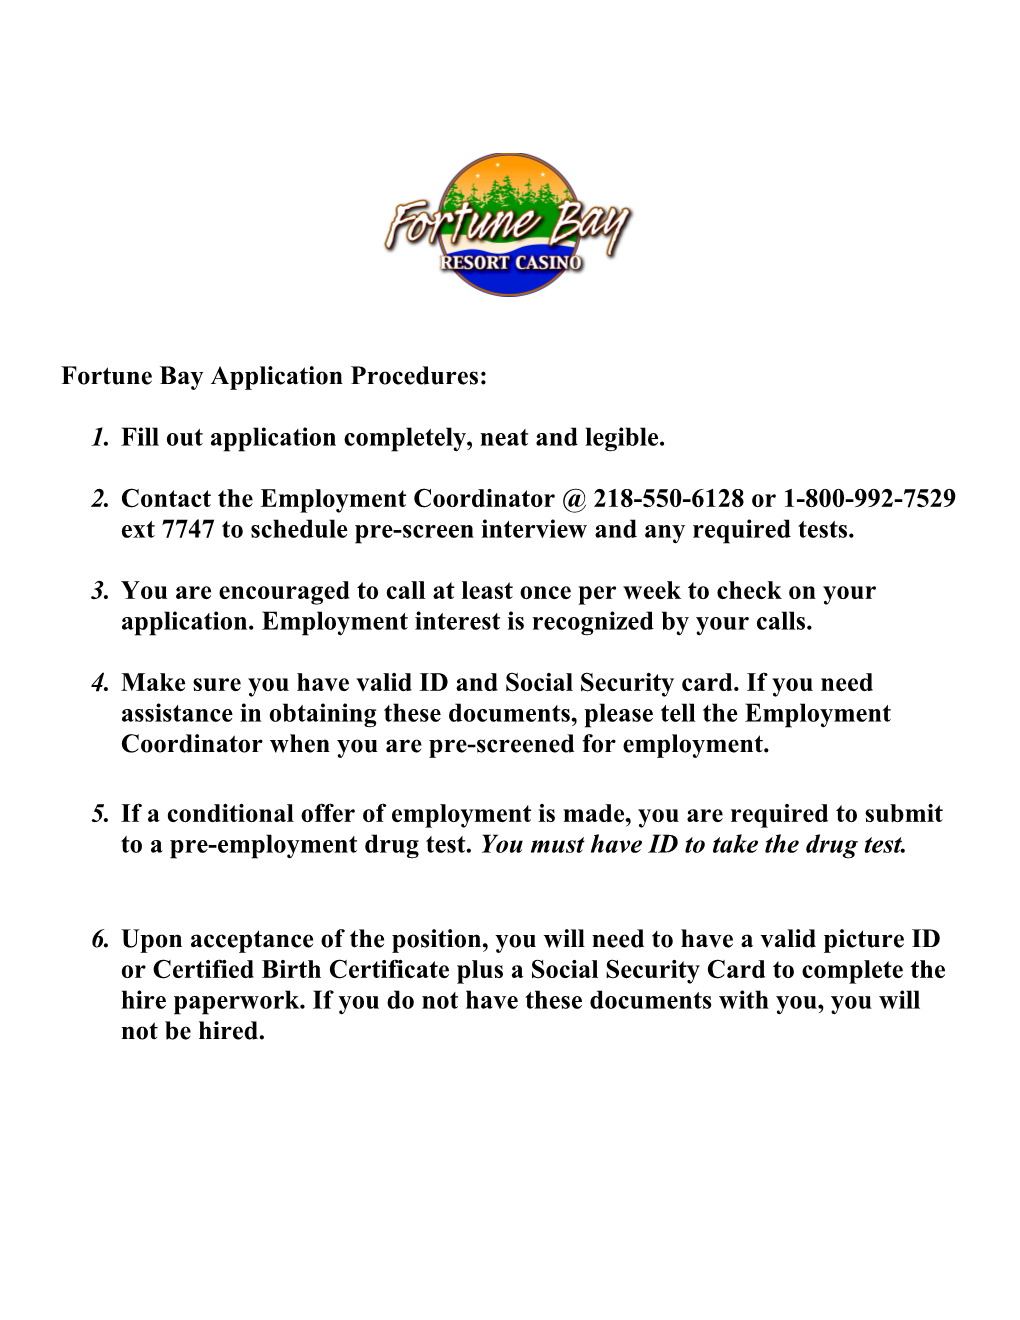 Fortunebay Application Procedures